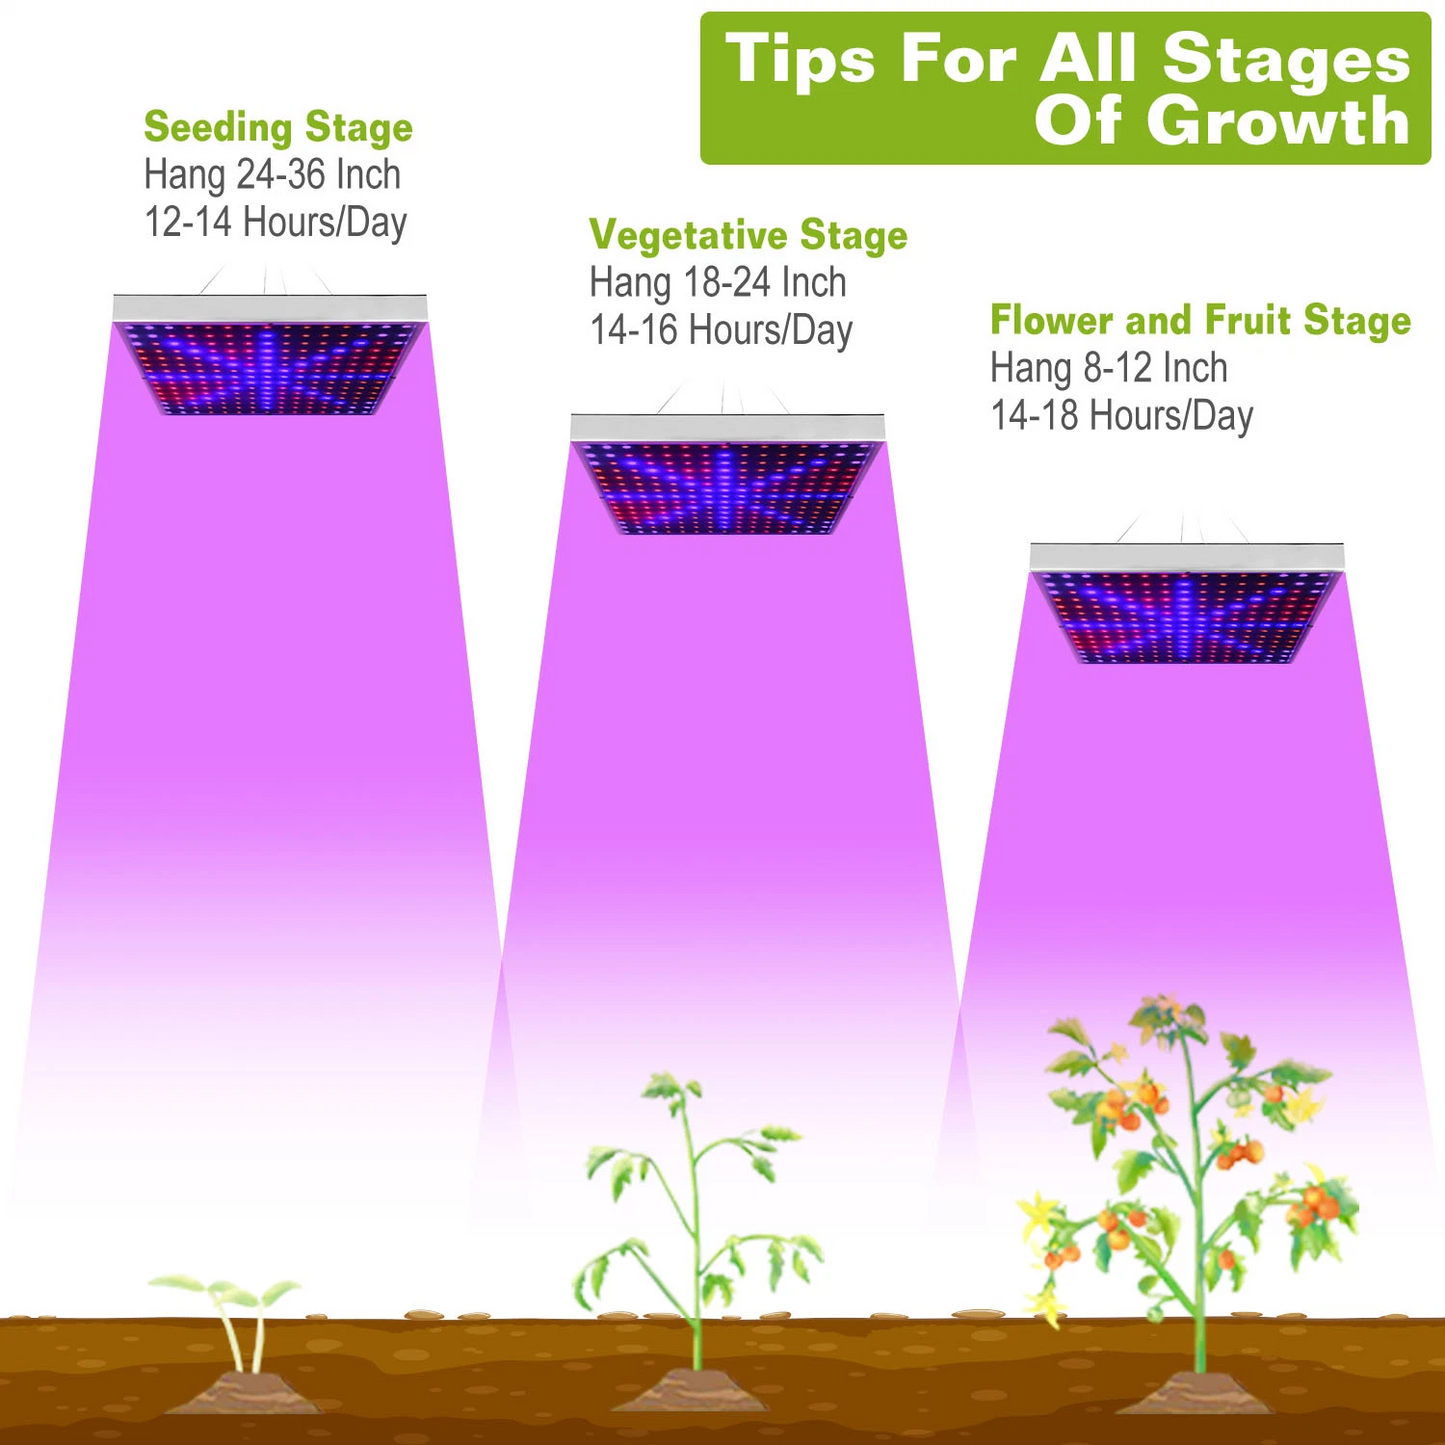 Full Spectrum LED Grow Light - 225 LEDs Indoor Plant Lamp for Optimal Growth